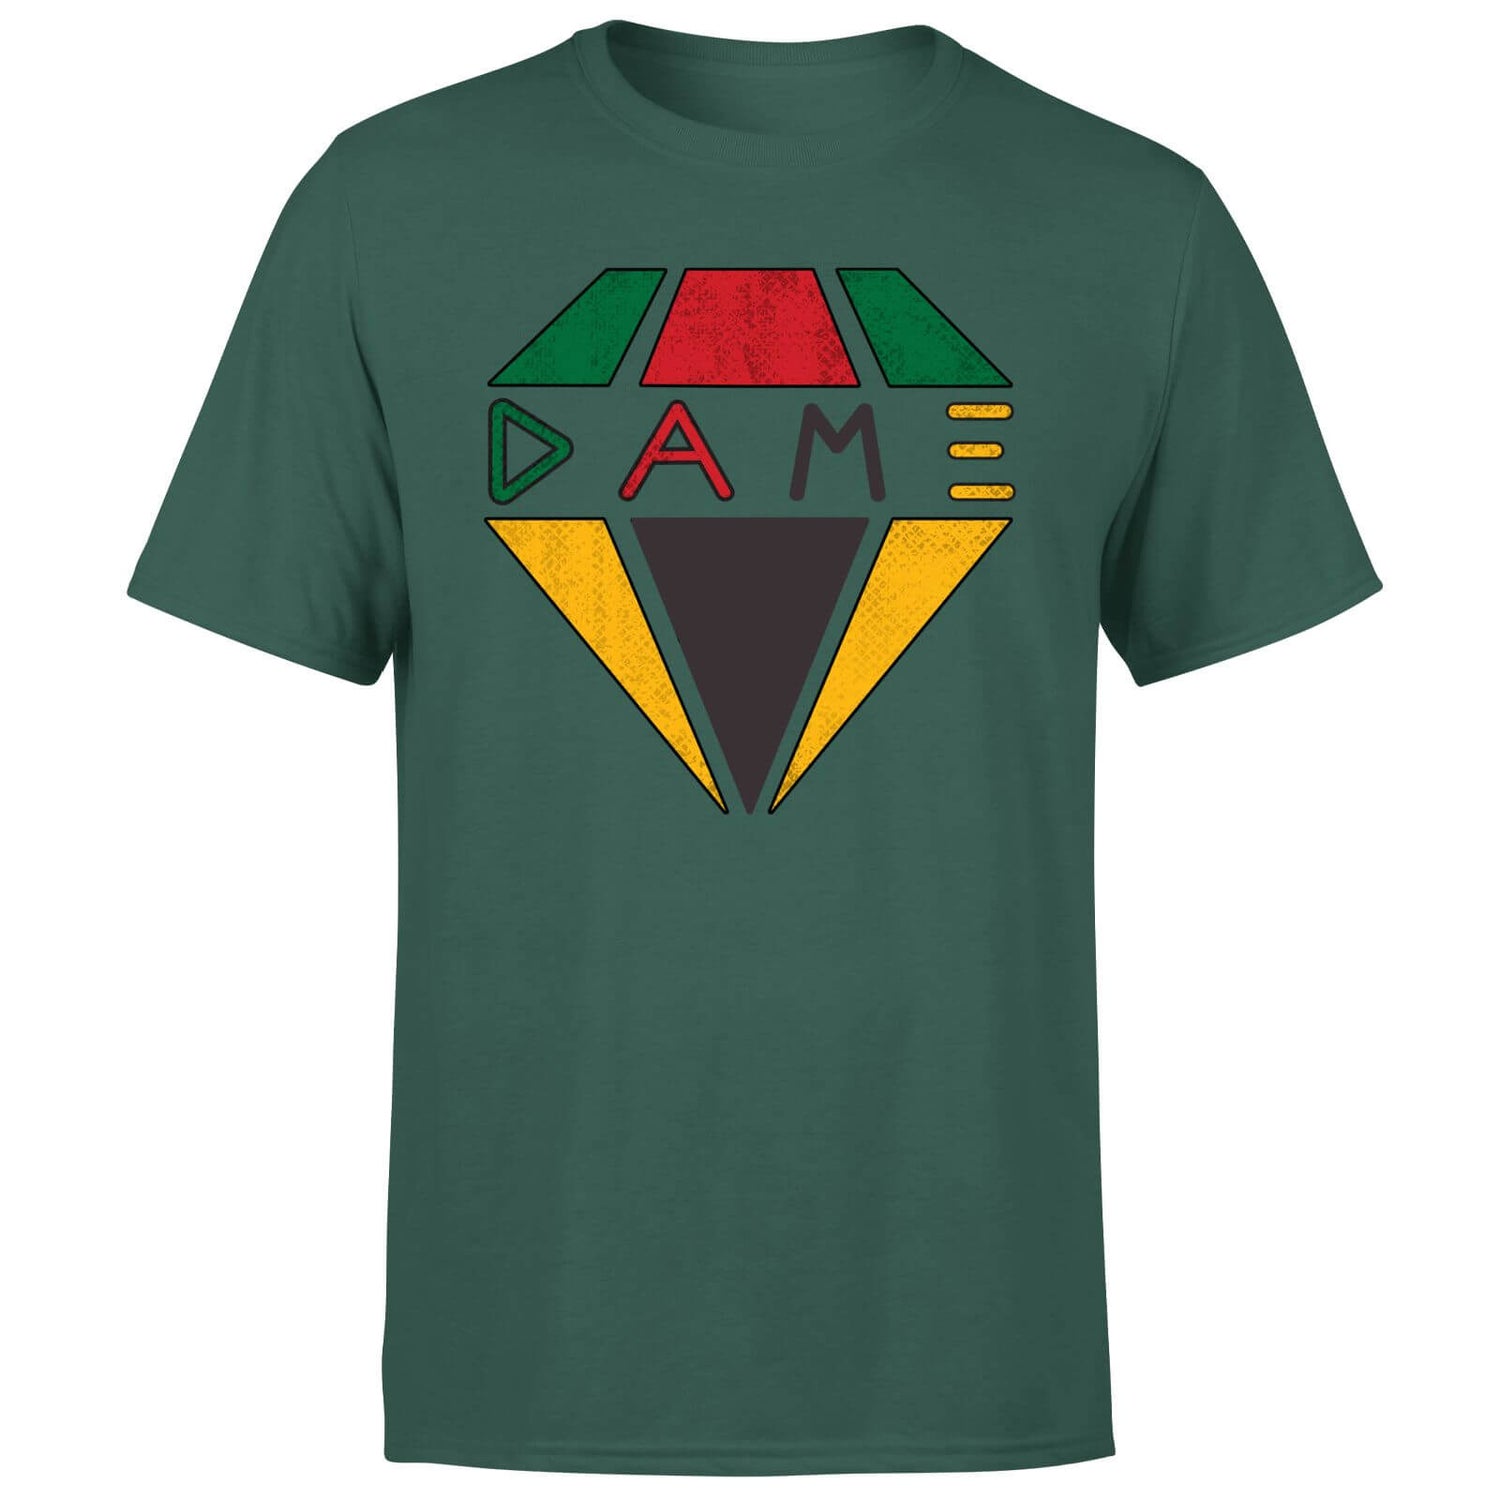 Creed DAME Diamond Logo Men's T-Shirt - Green